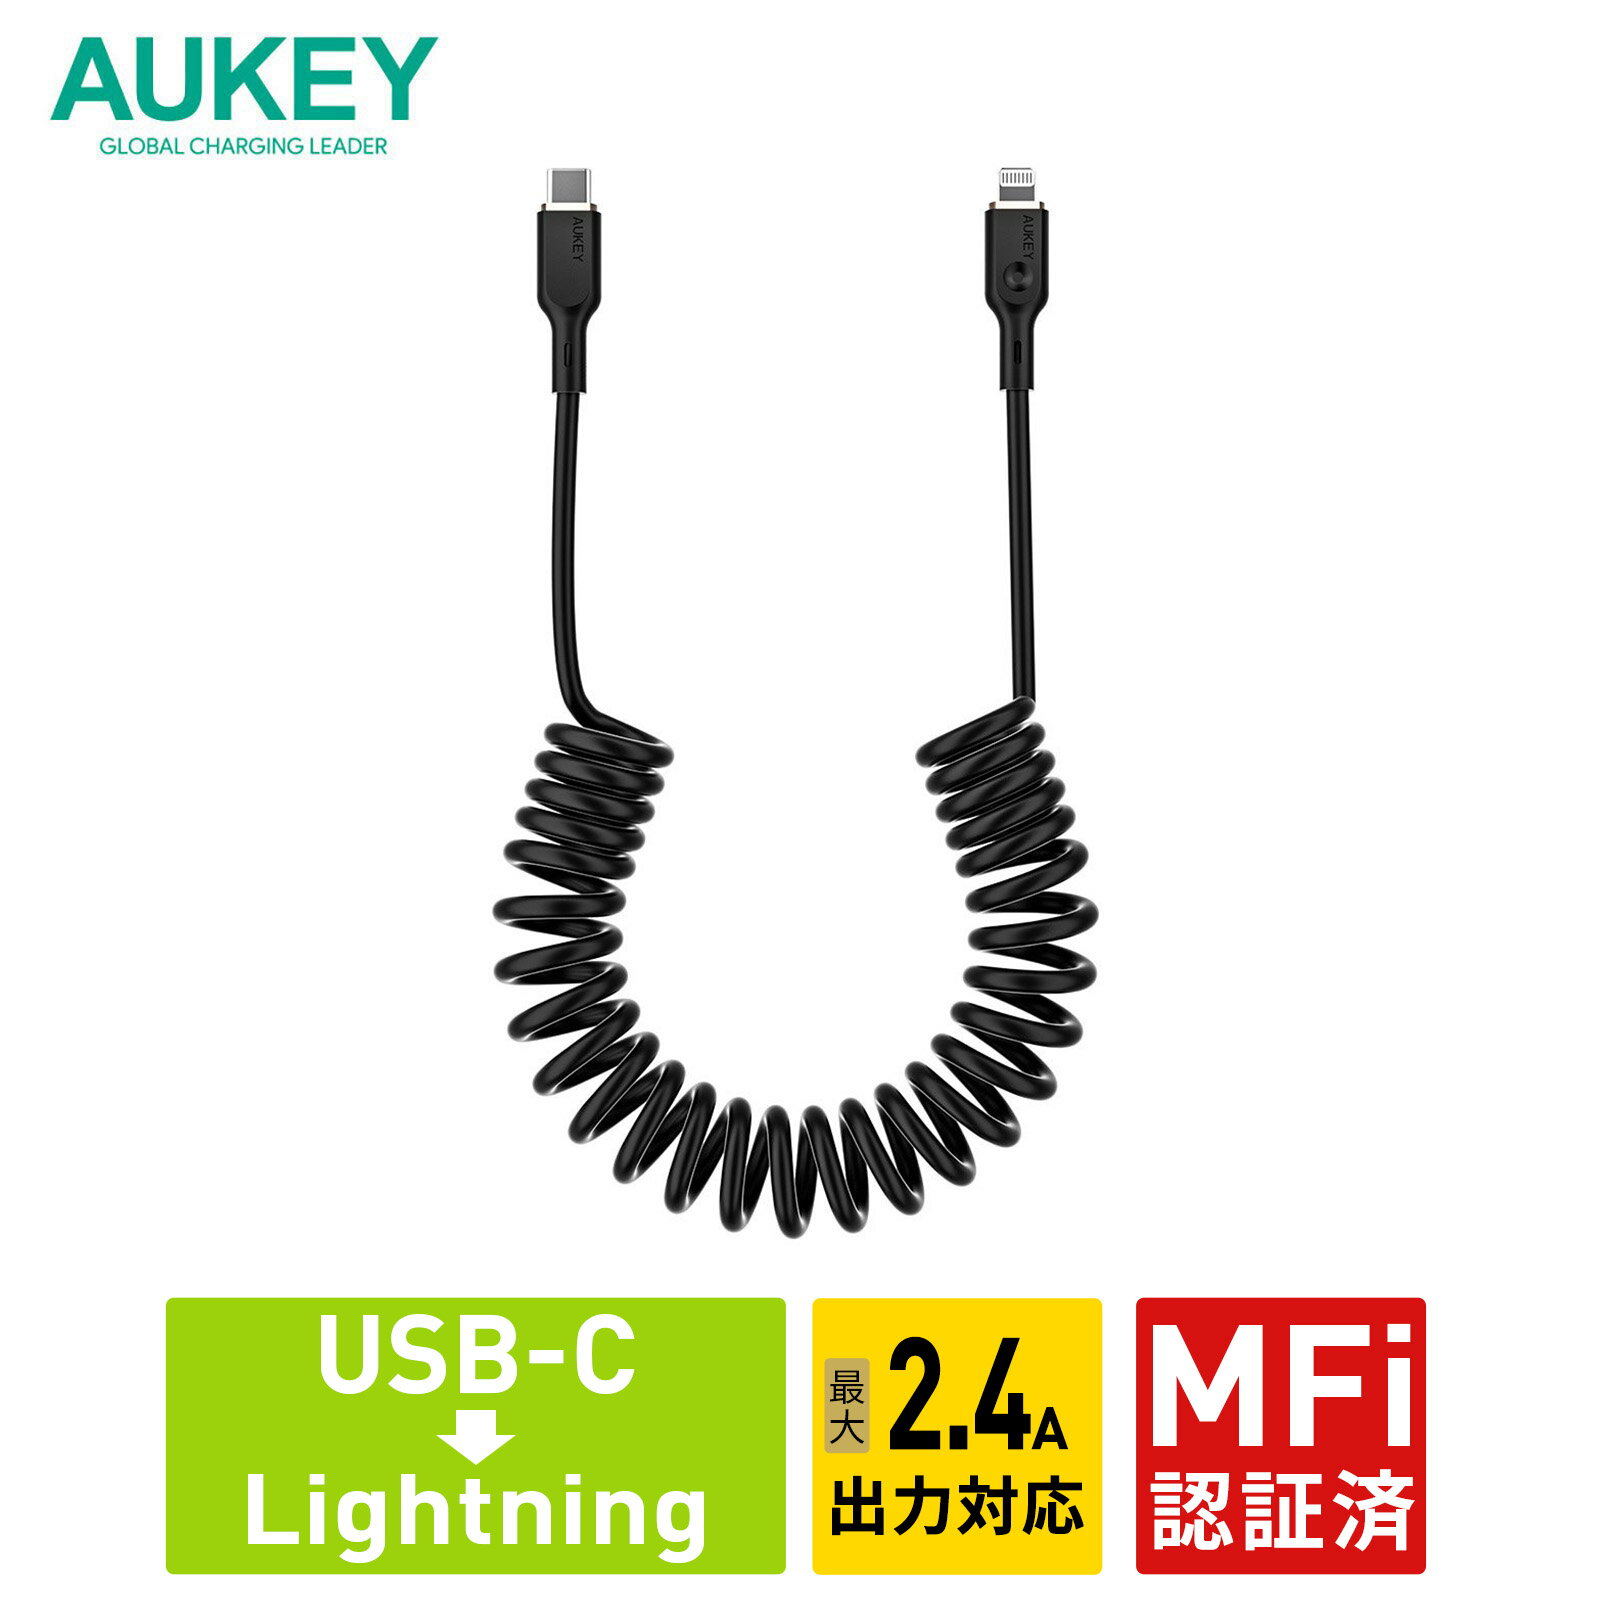 AUKEY USB Type-C to Lightning ケーブル C-L 1.5m Coiled Series CB-CL19 急速充電 コイル型 データ転送 480Mbps MFi認証 ライトニングケーブル ブラック 2年保証 オーキー